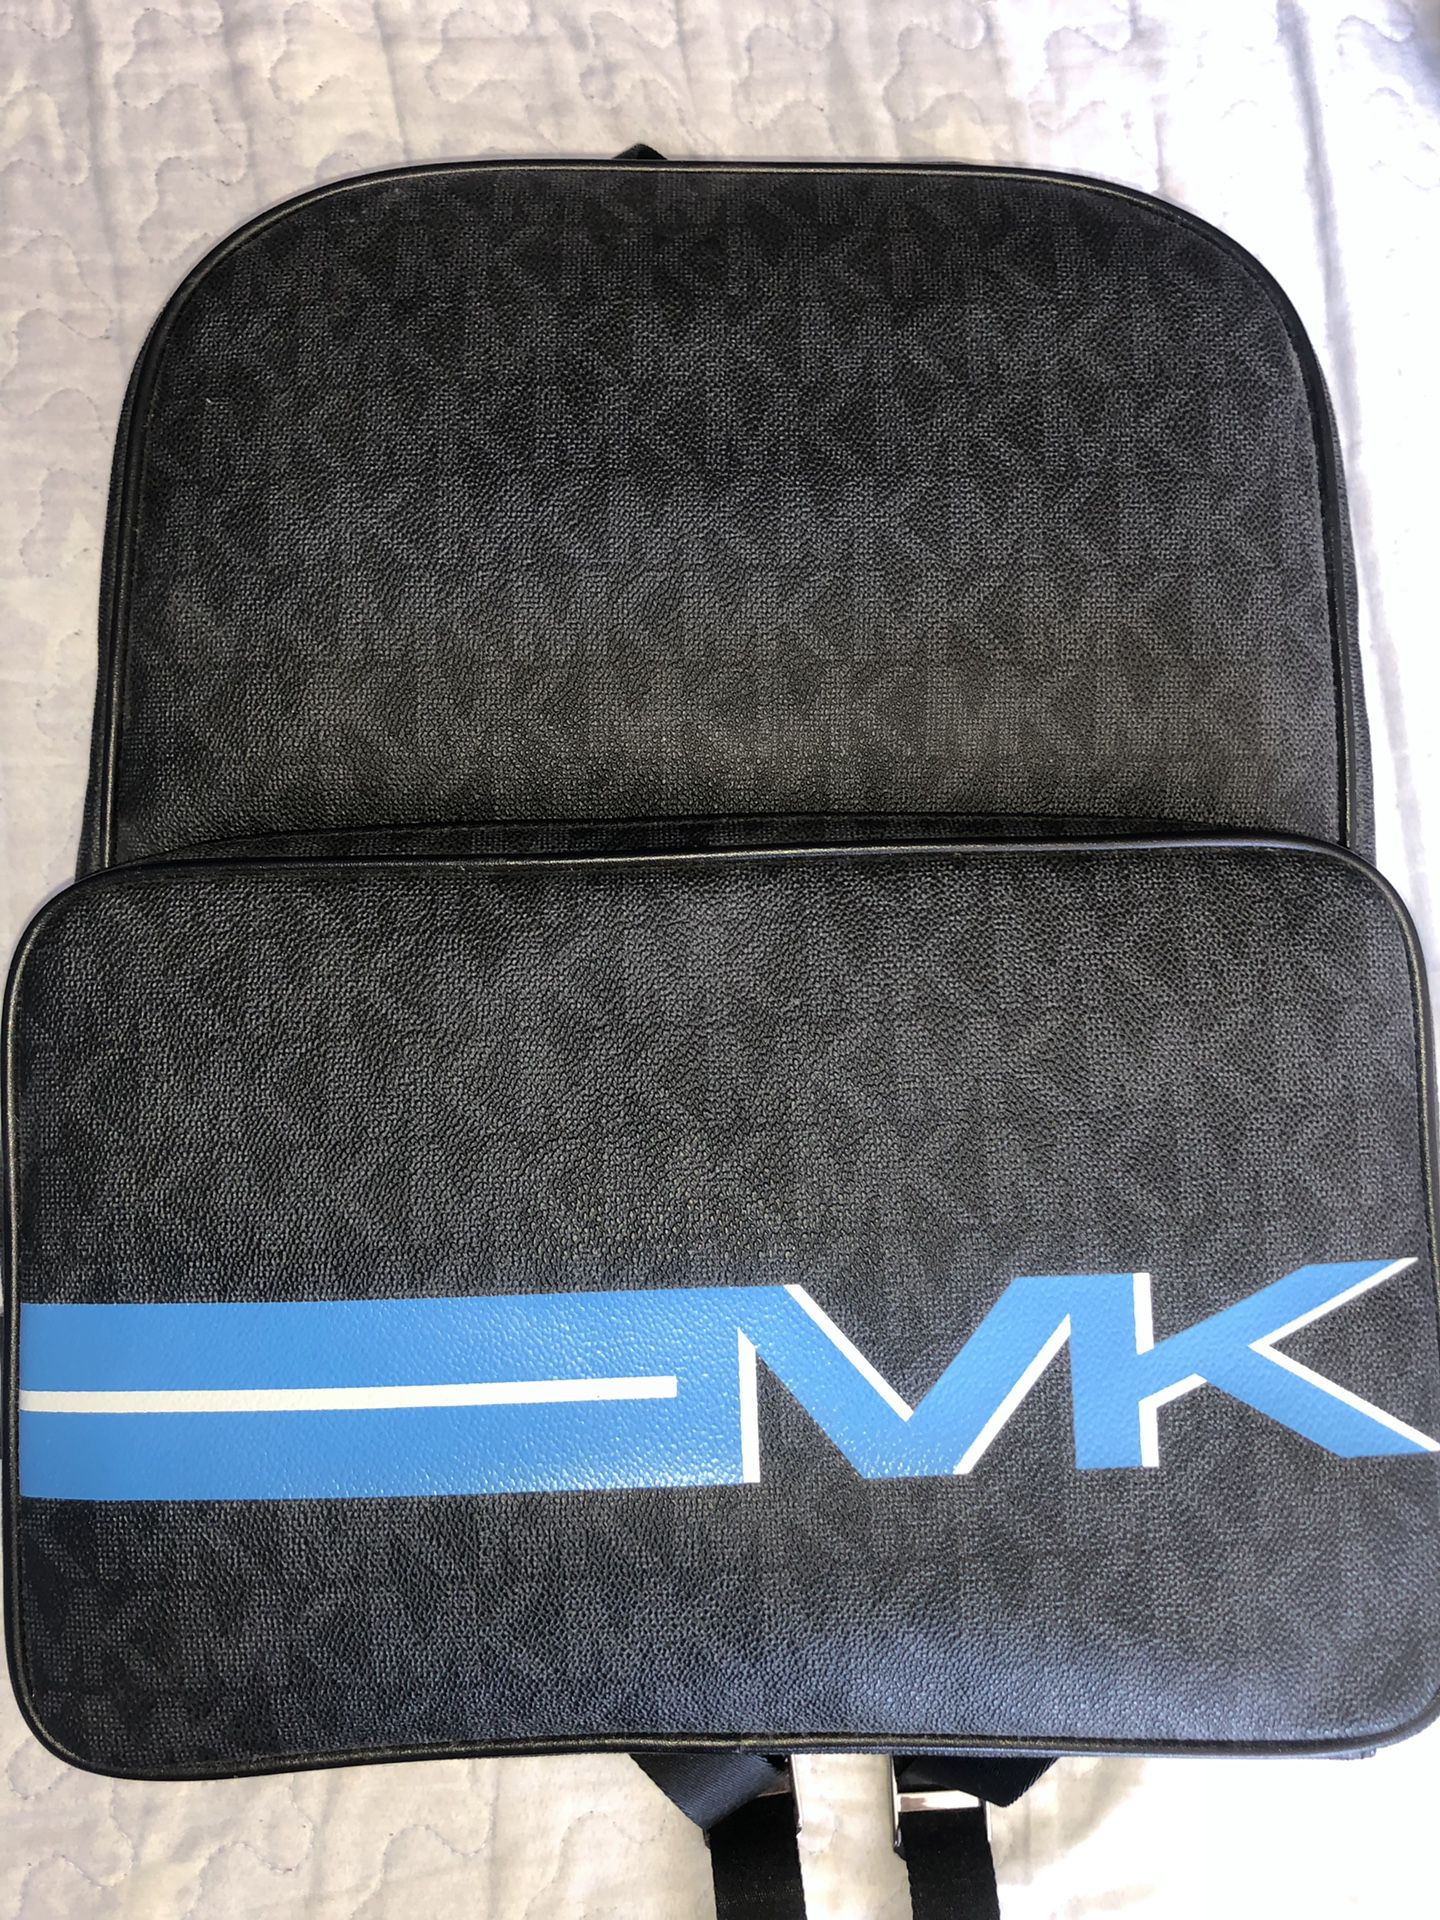 (New Authentic) Michael Kors Men's Backpack